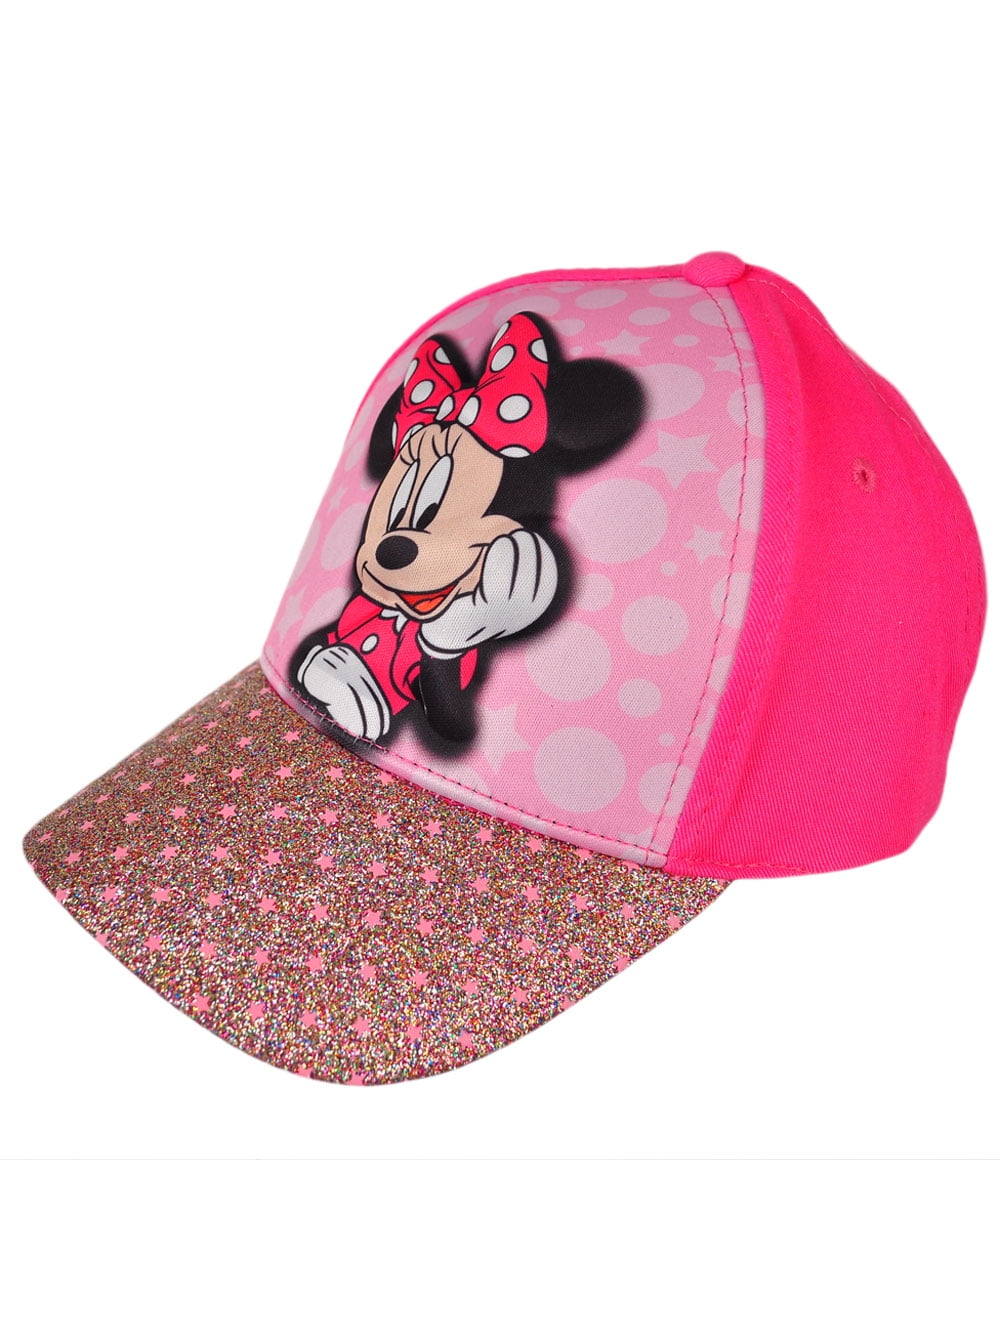 Disneys Minnie Mouse Minnie Rocks the Dots Velcro Adjustable Kids Cap